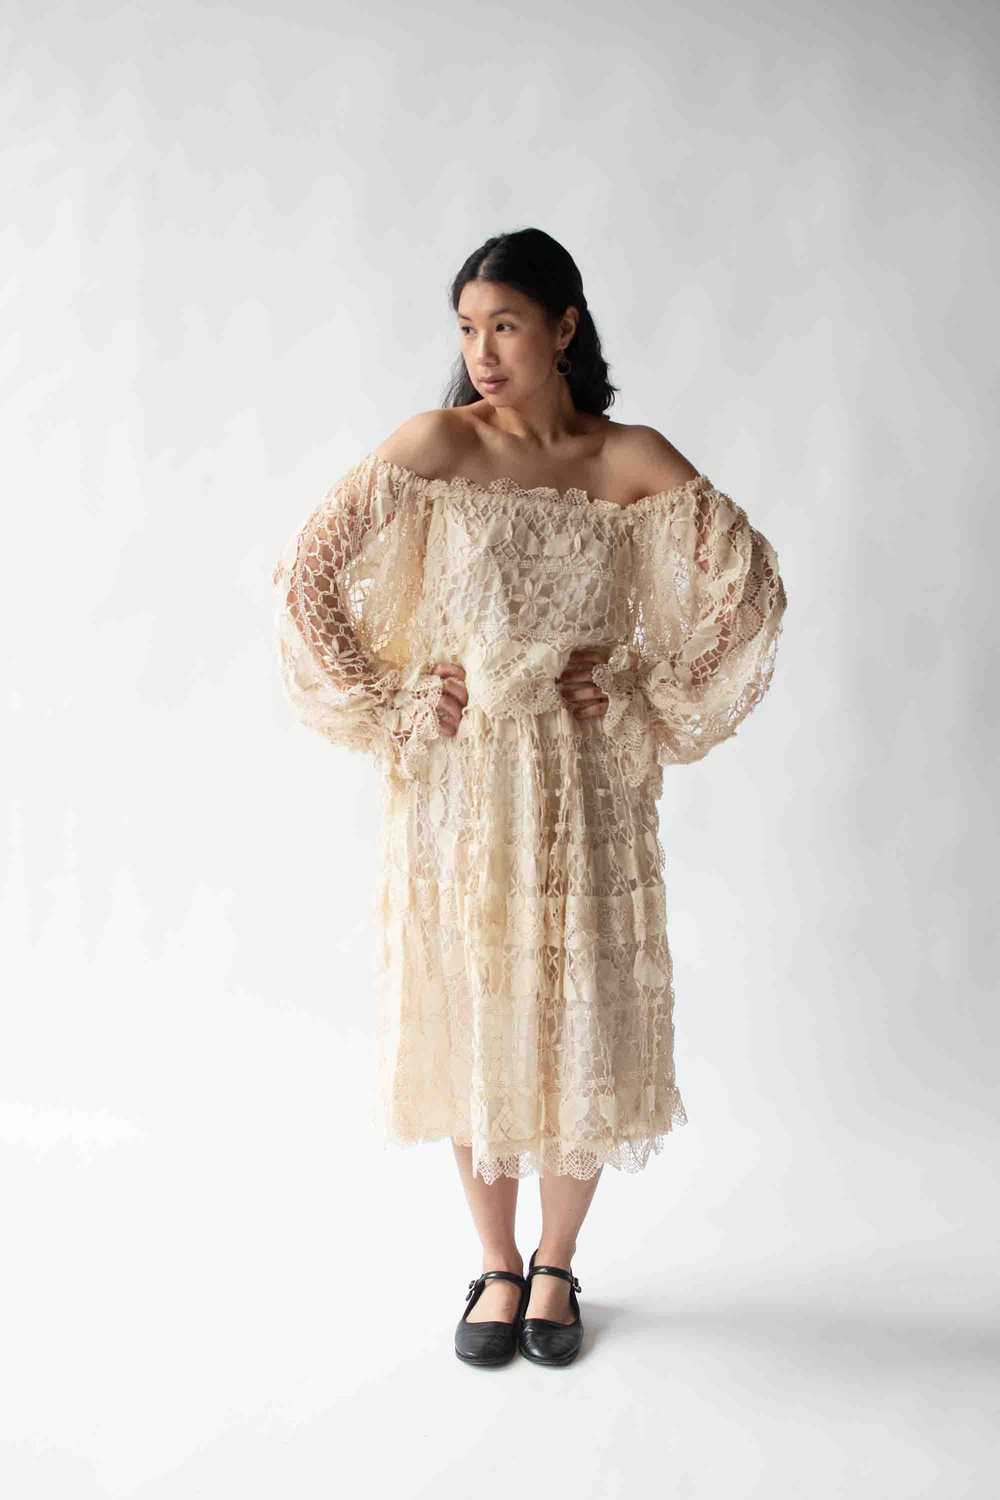 1970s Crochet Dress Set - image 2